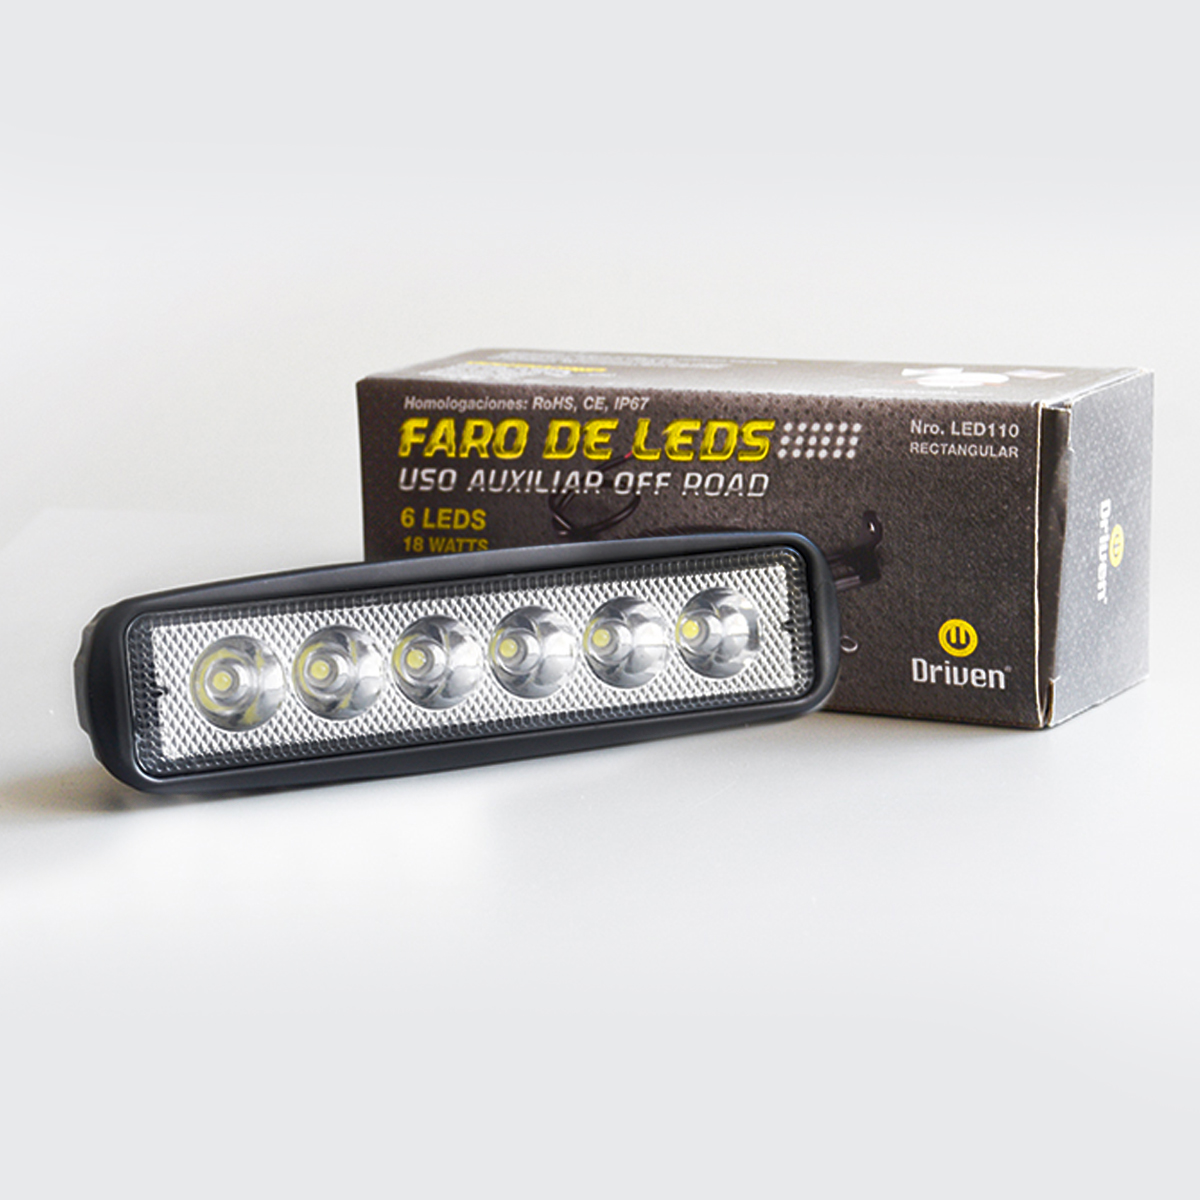 LED120 FARO DE LED OFF ROAD - 9 LEDS - 27 WATTS - DRIVEN